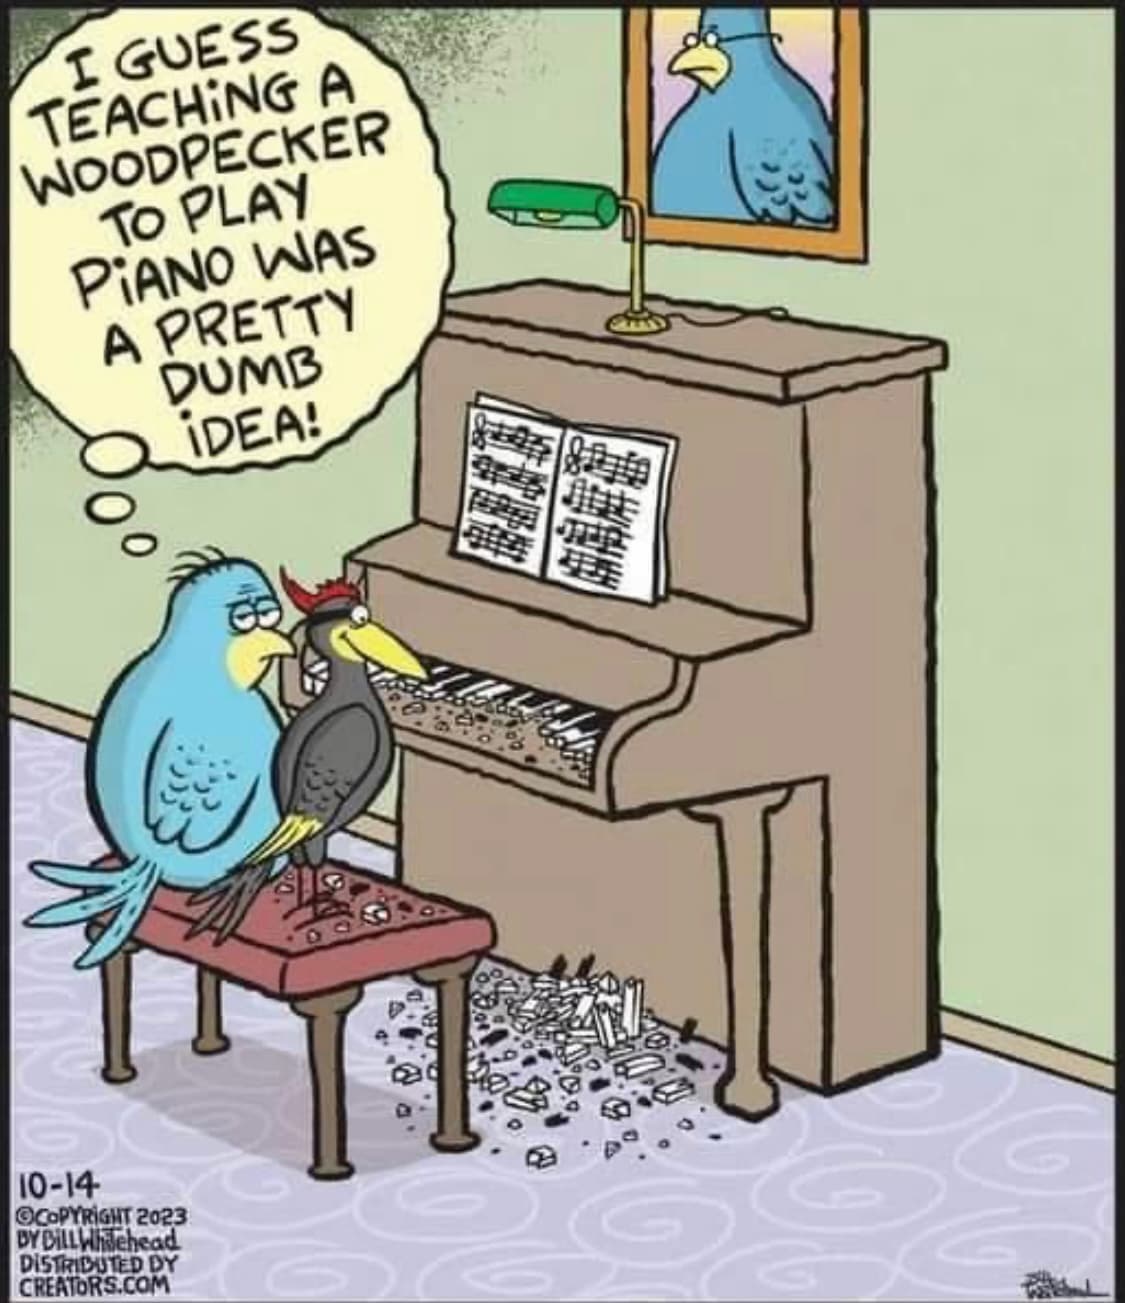 teaching a woodpecker piano